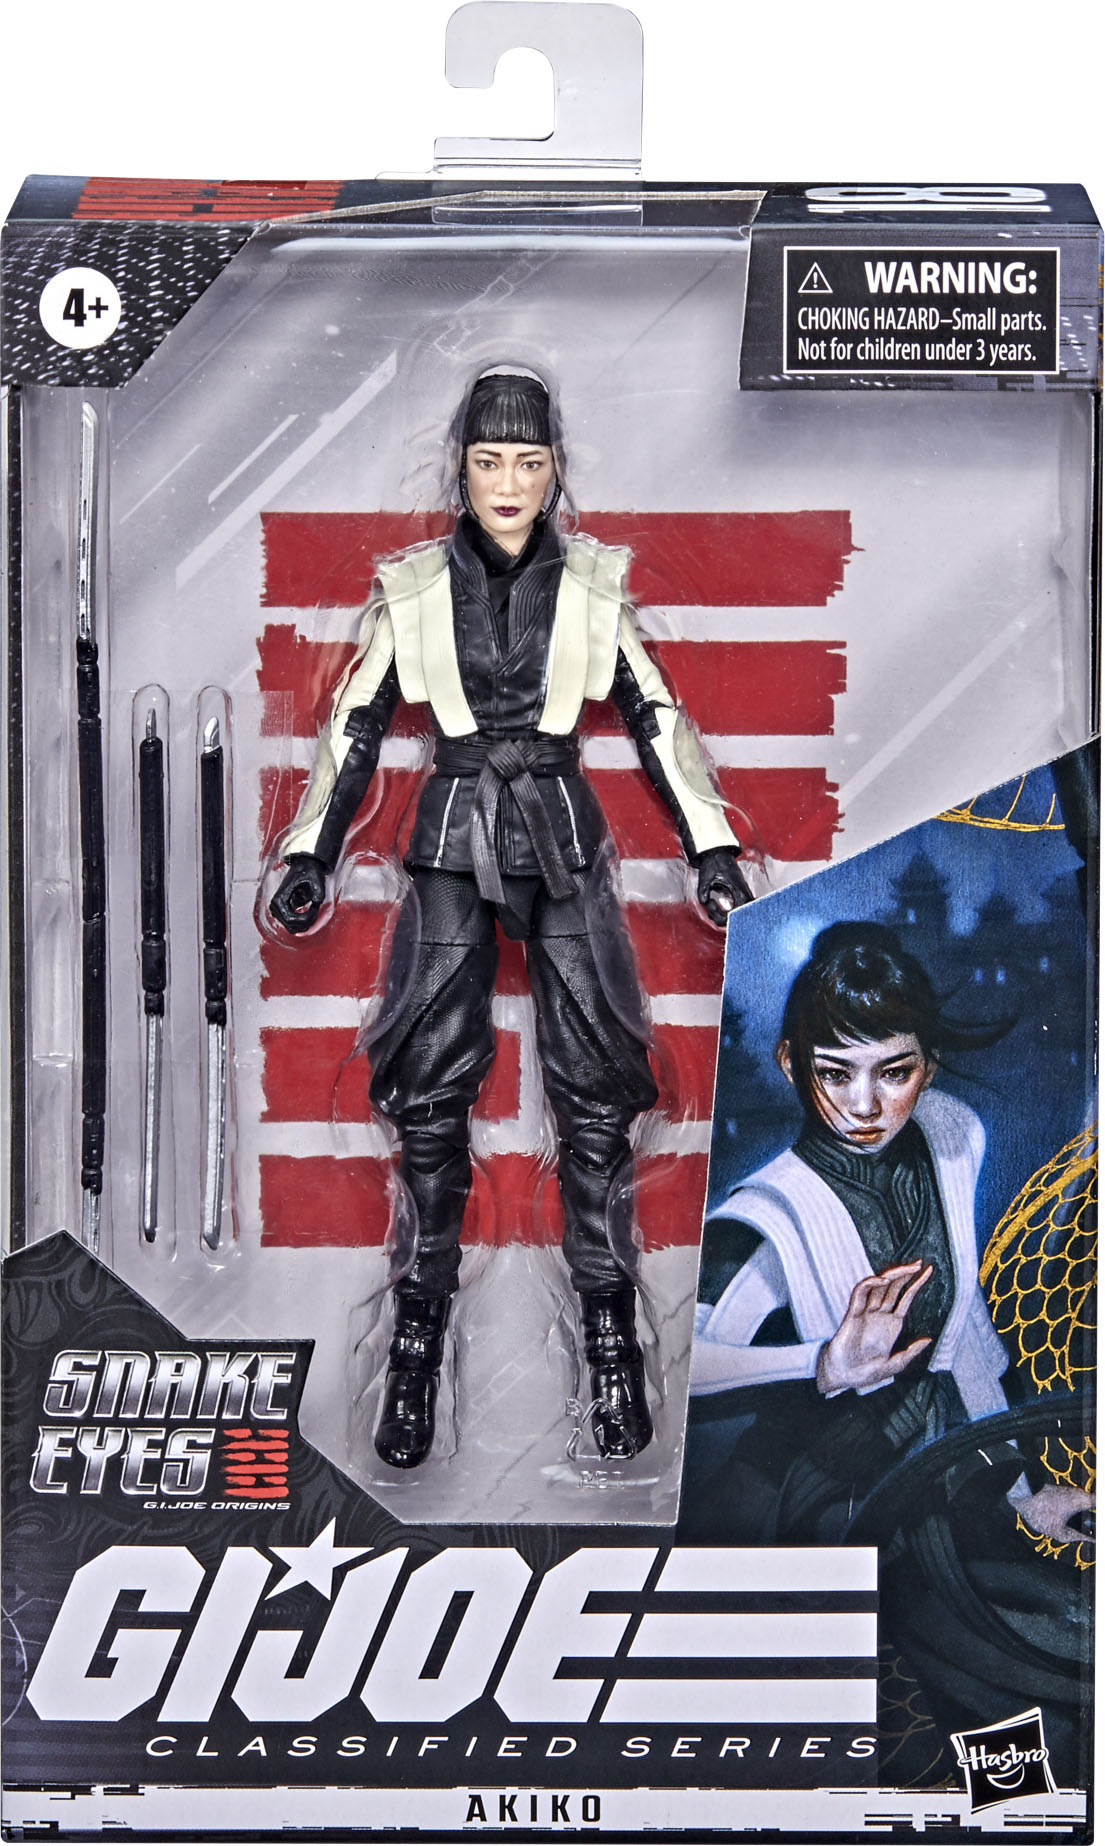 Hasbro - G.I. Joe Classified Series Snake Eyes: G.I. Joe Origins Akiko Action Figure 18, Premium Toy with Custom Package Art